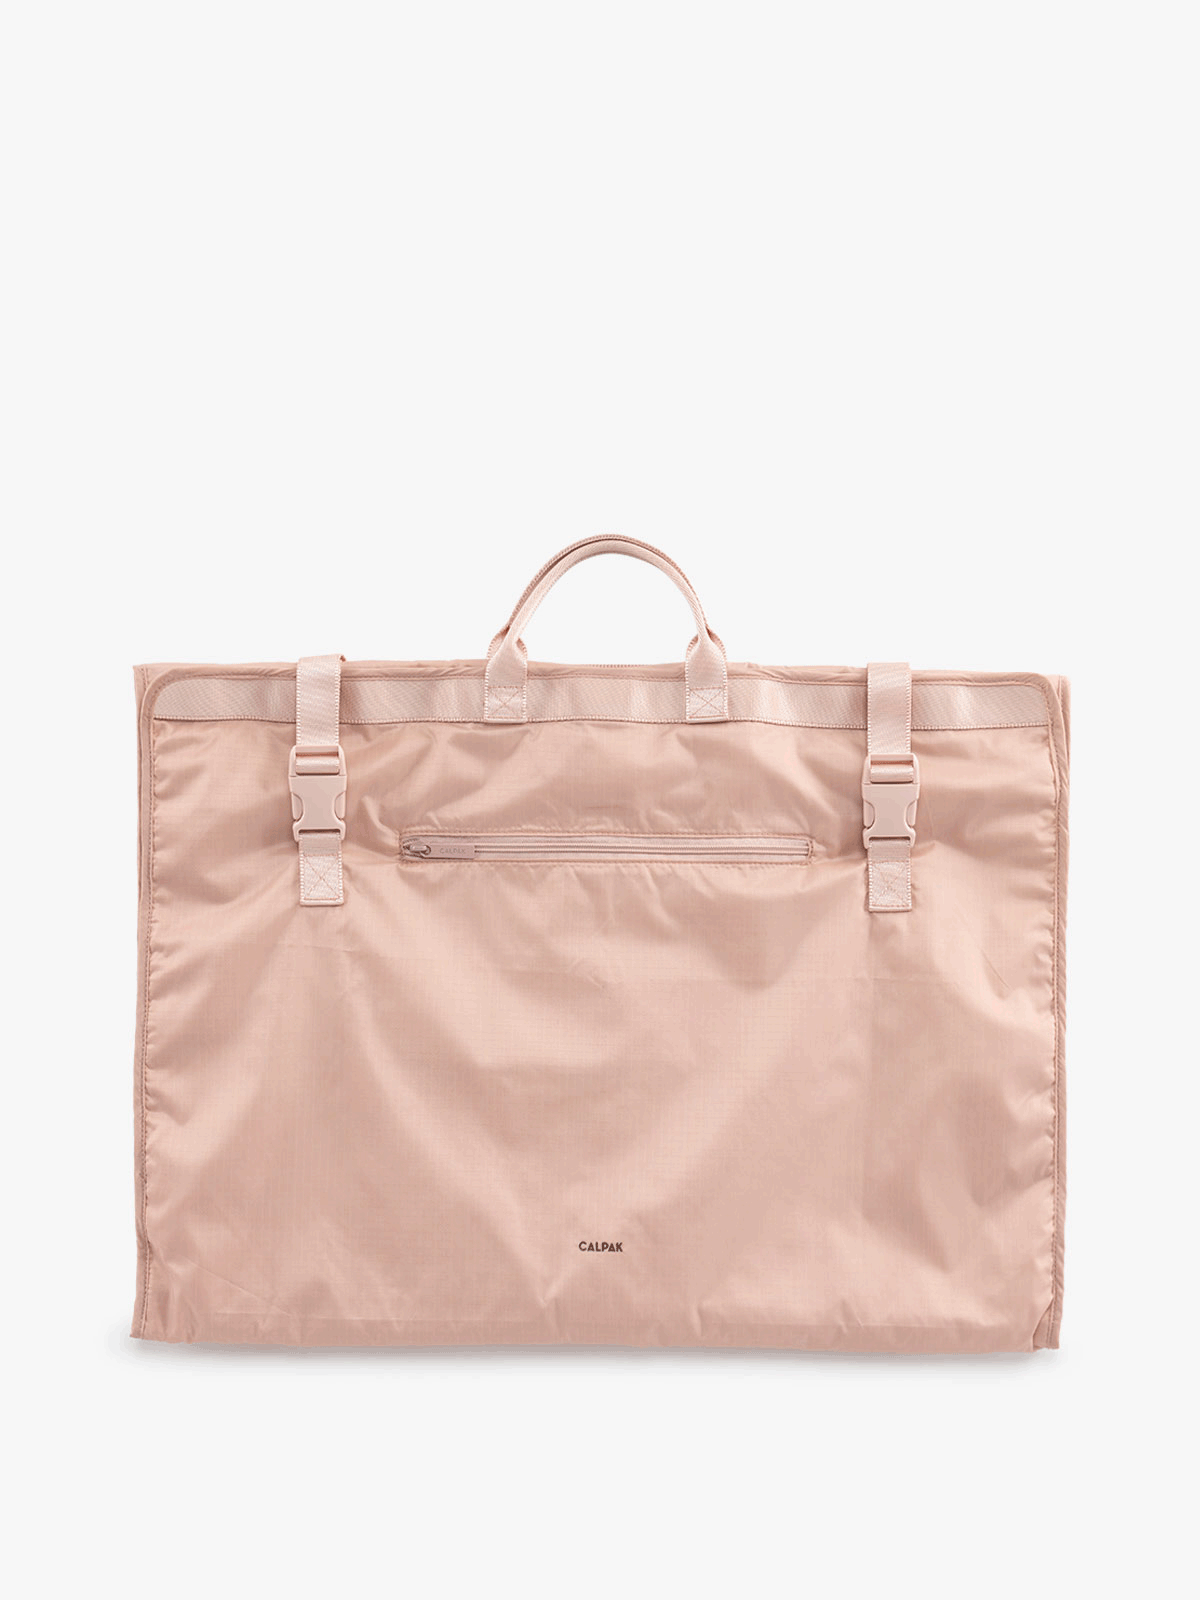 CALPAK large garment bag for travel in light pink mauve